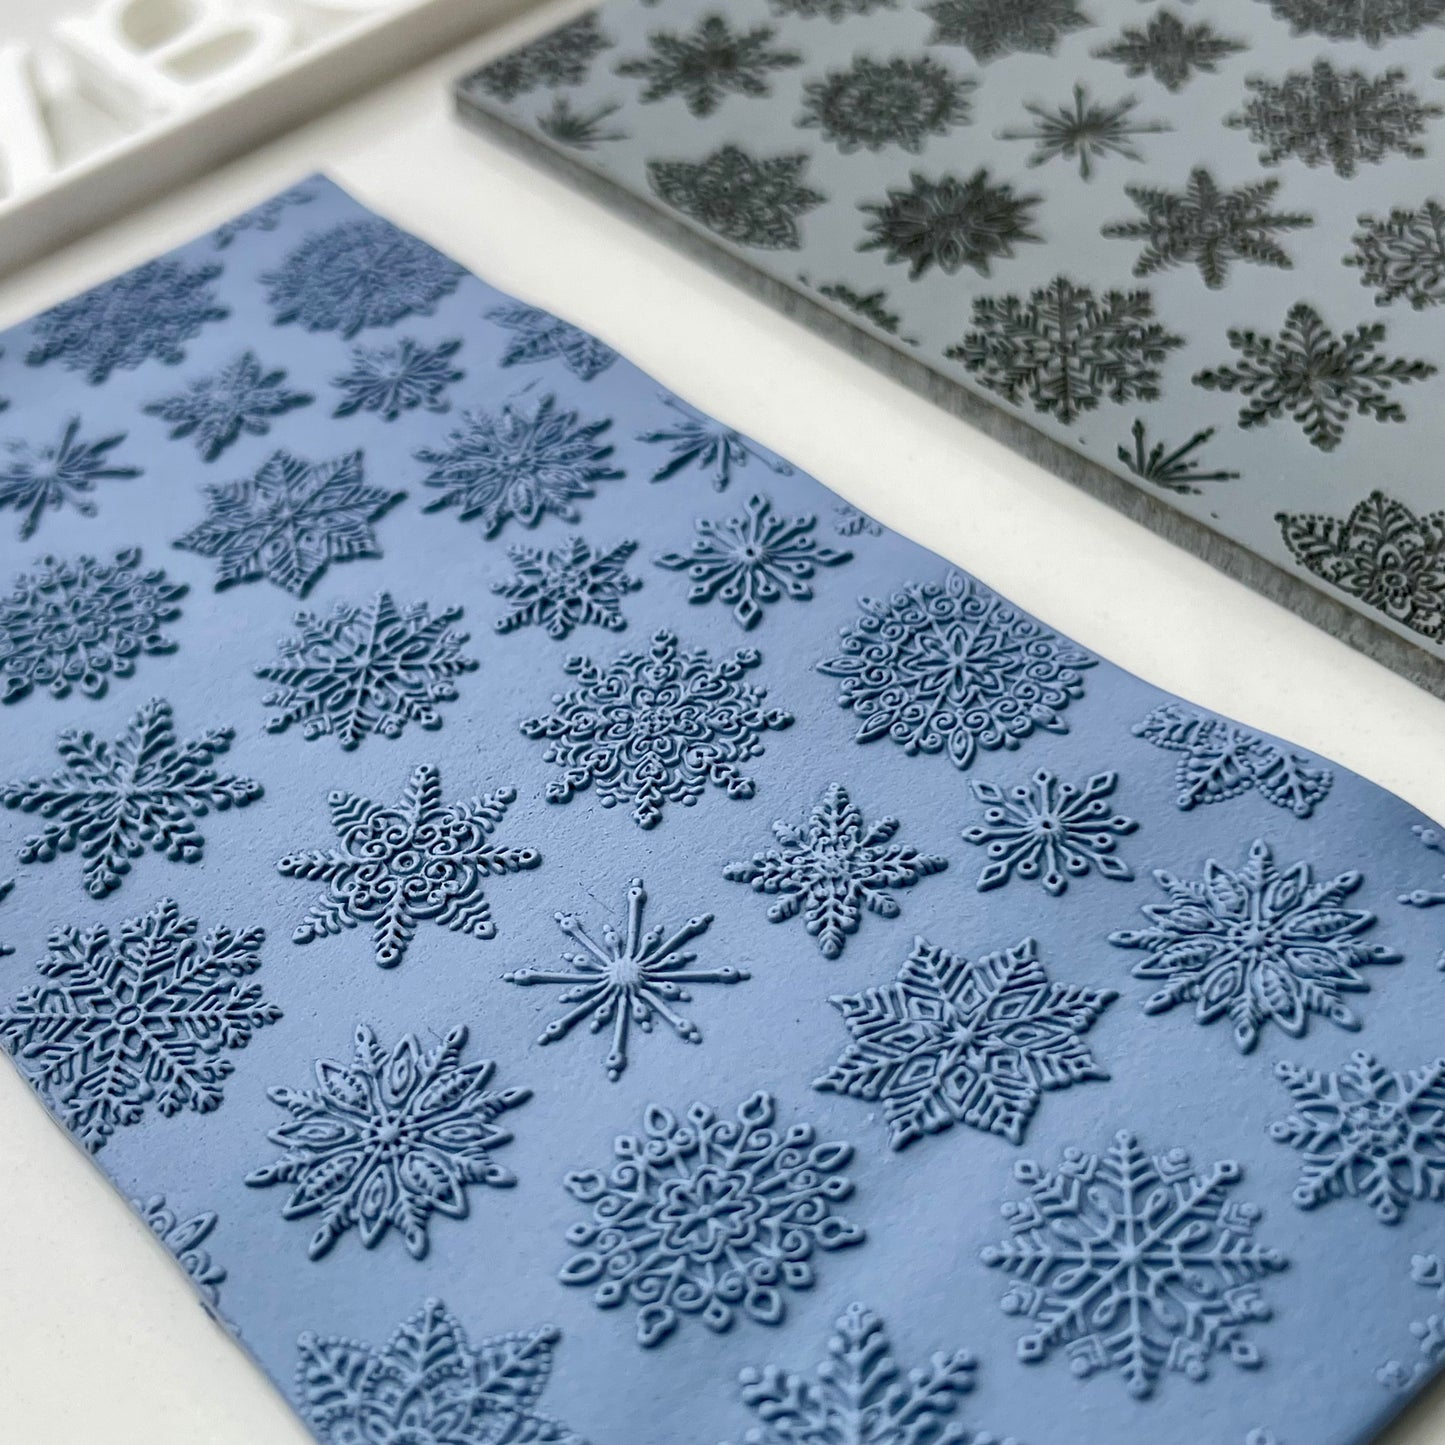 Snowflakes texture mat